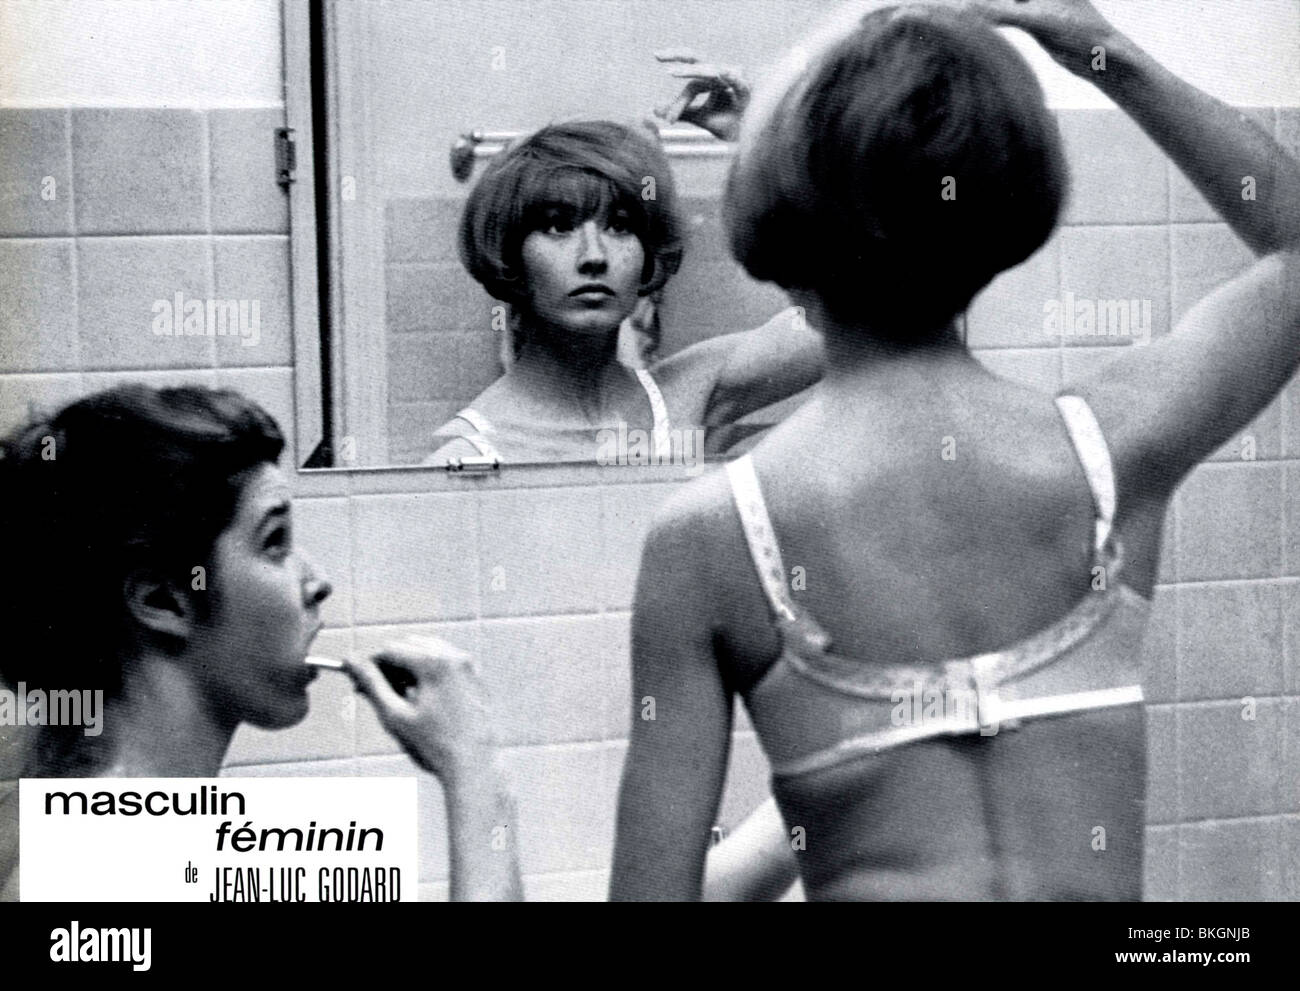 MASCULINE-FEMININE (1966) MARLENE JOBERT MCFM 004 P Stock Photo